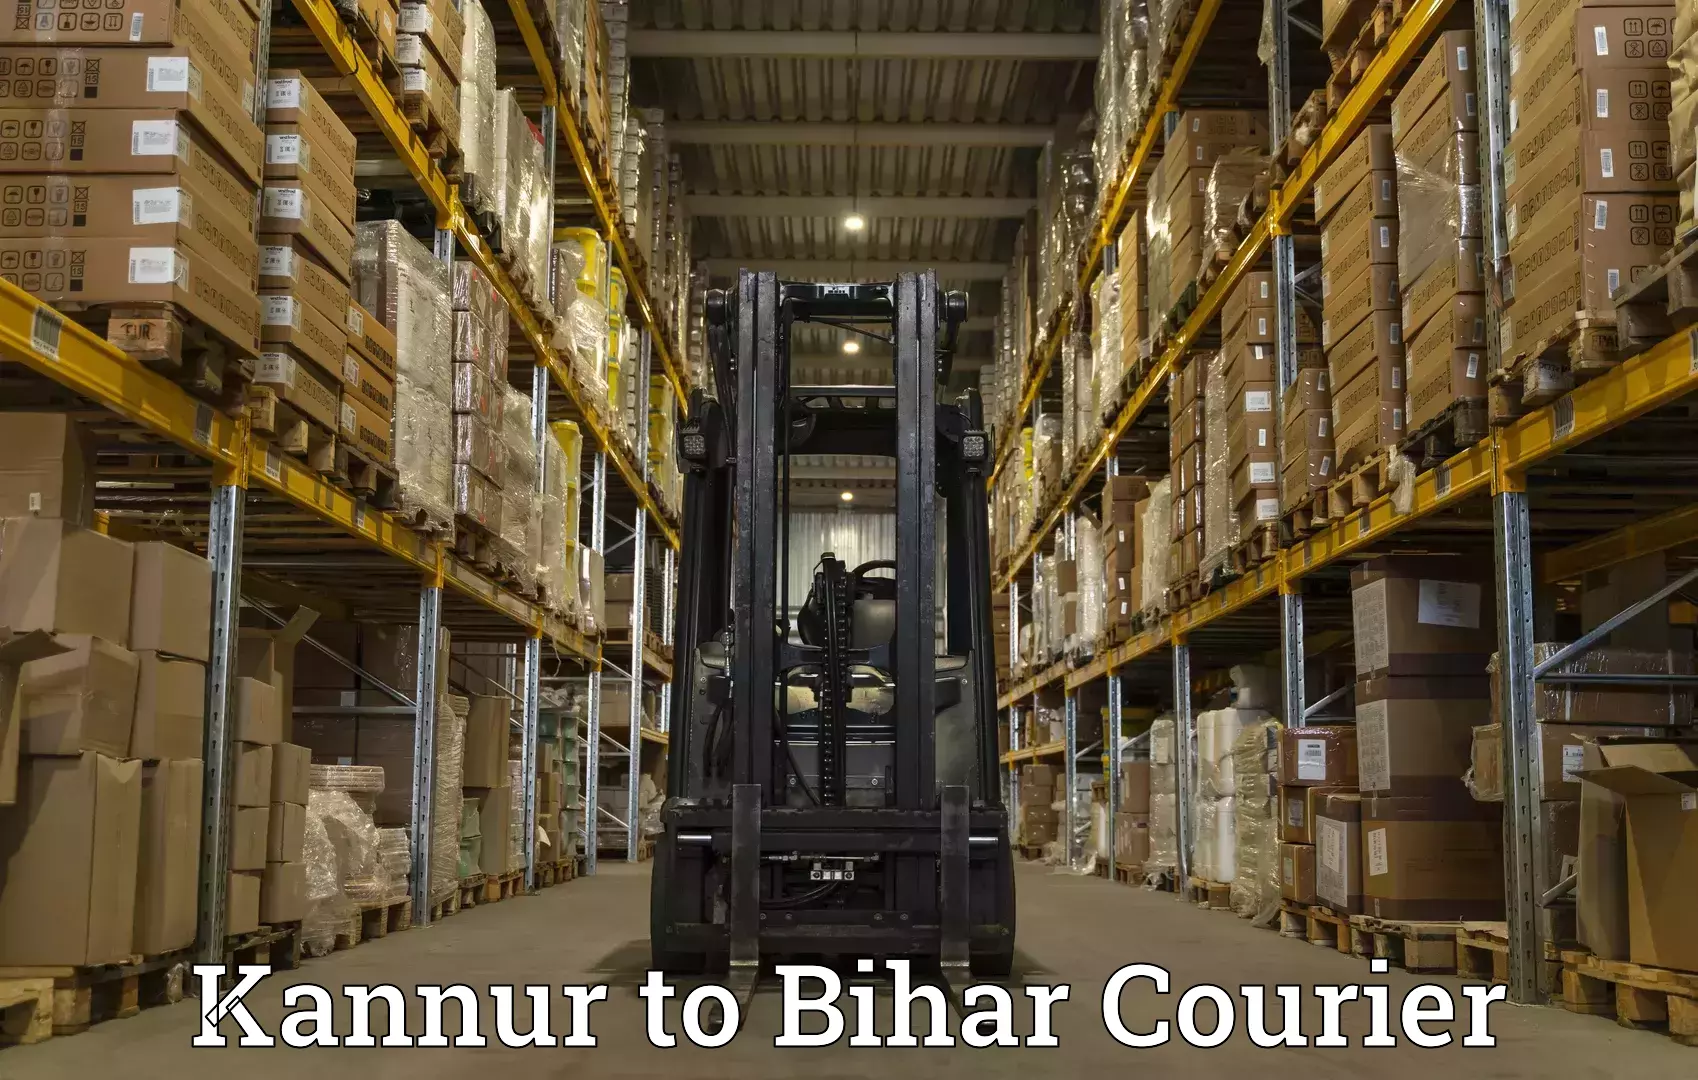 Courier service innovation Kannur to Aurangabad Bihar